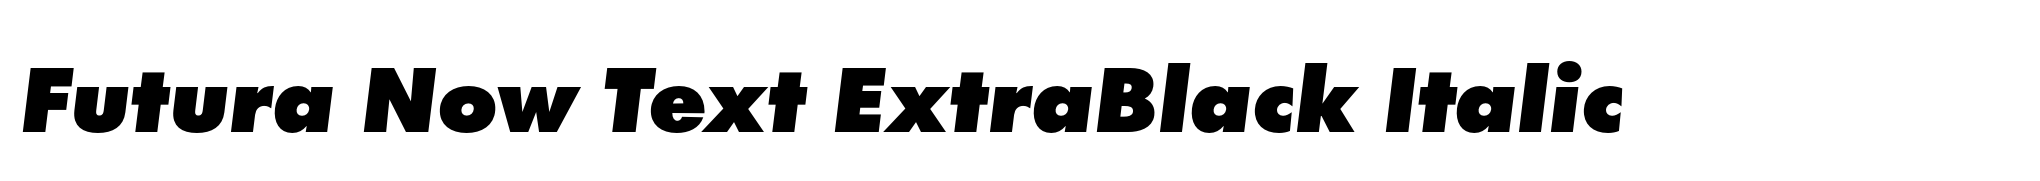 Futura Now Text ExtraBlack Italic image